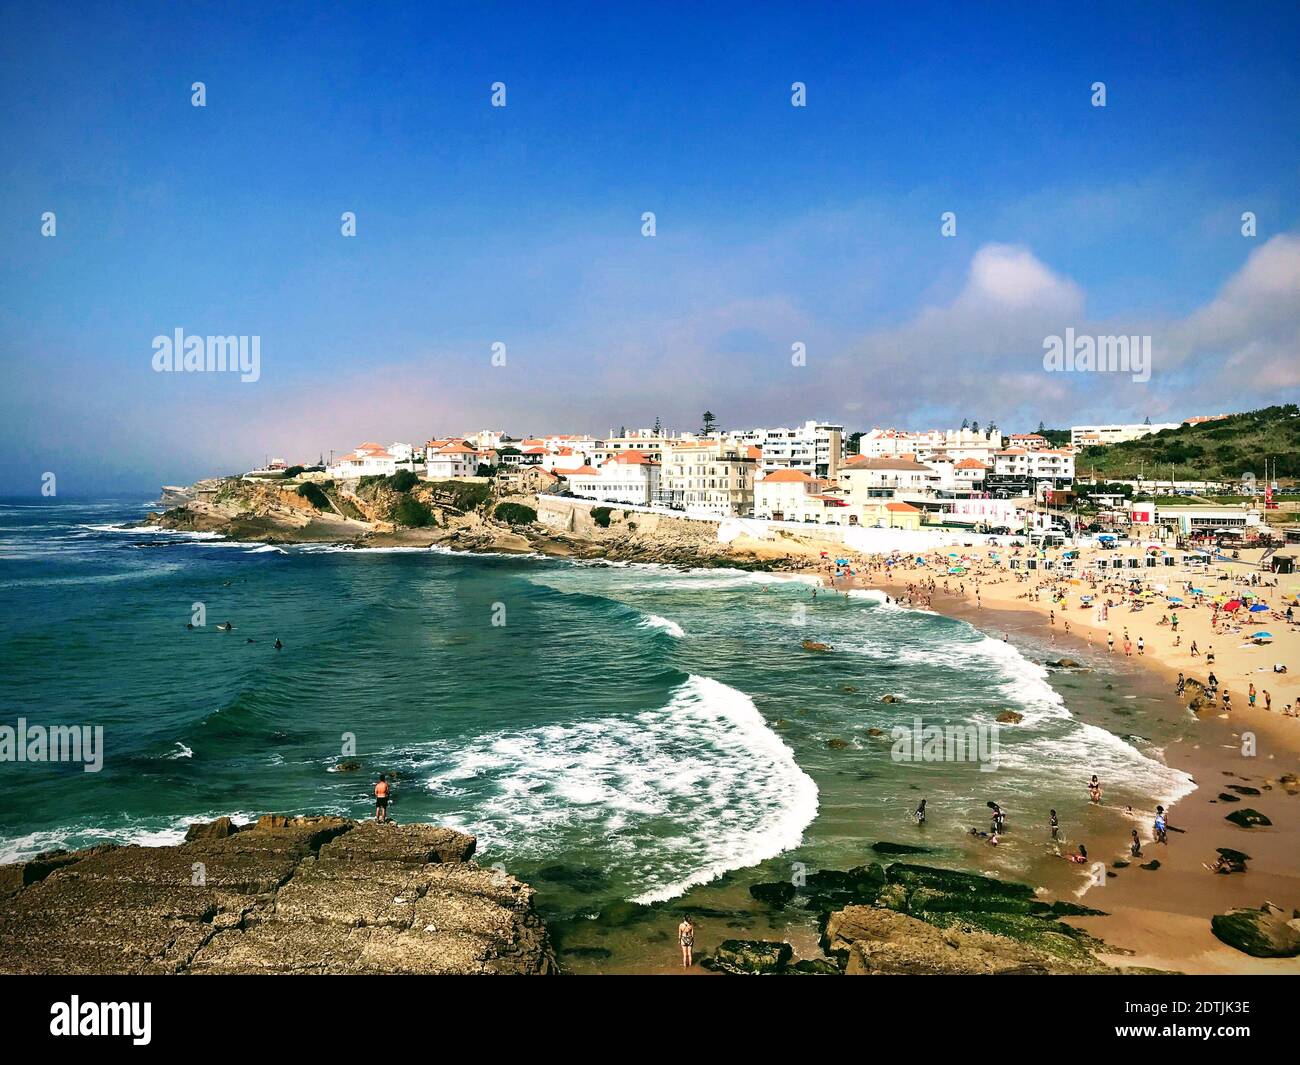 Praia das macas portugal hi-res stock photography and images - Alamy